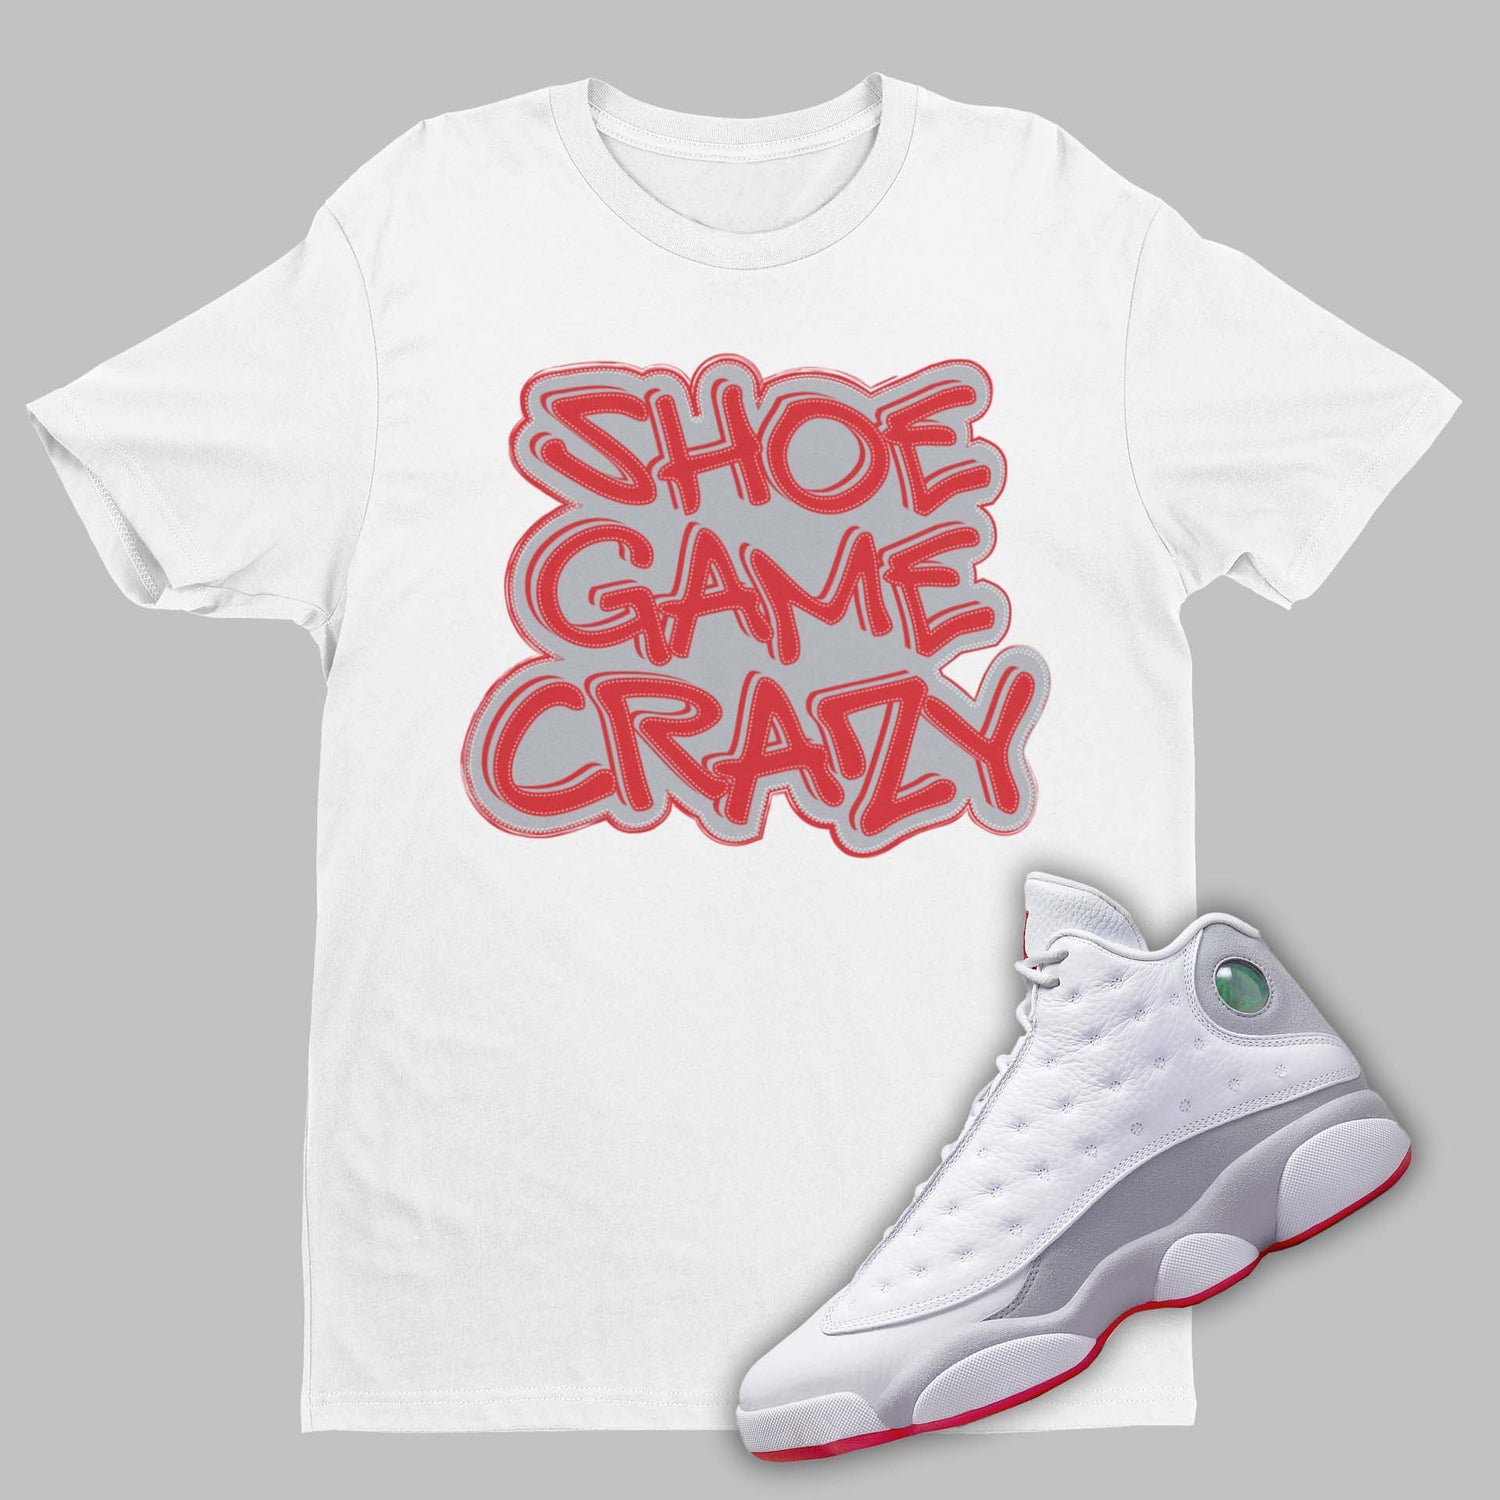 Shoe Game Crazy Air Jordan 13 Wolf Grey Matching T-Shirt from SNKADX